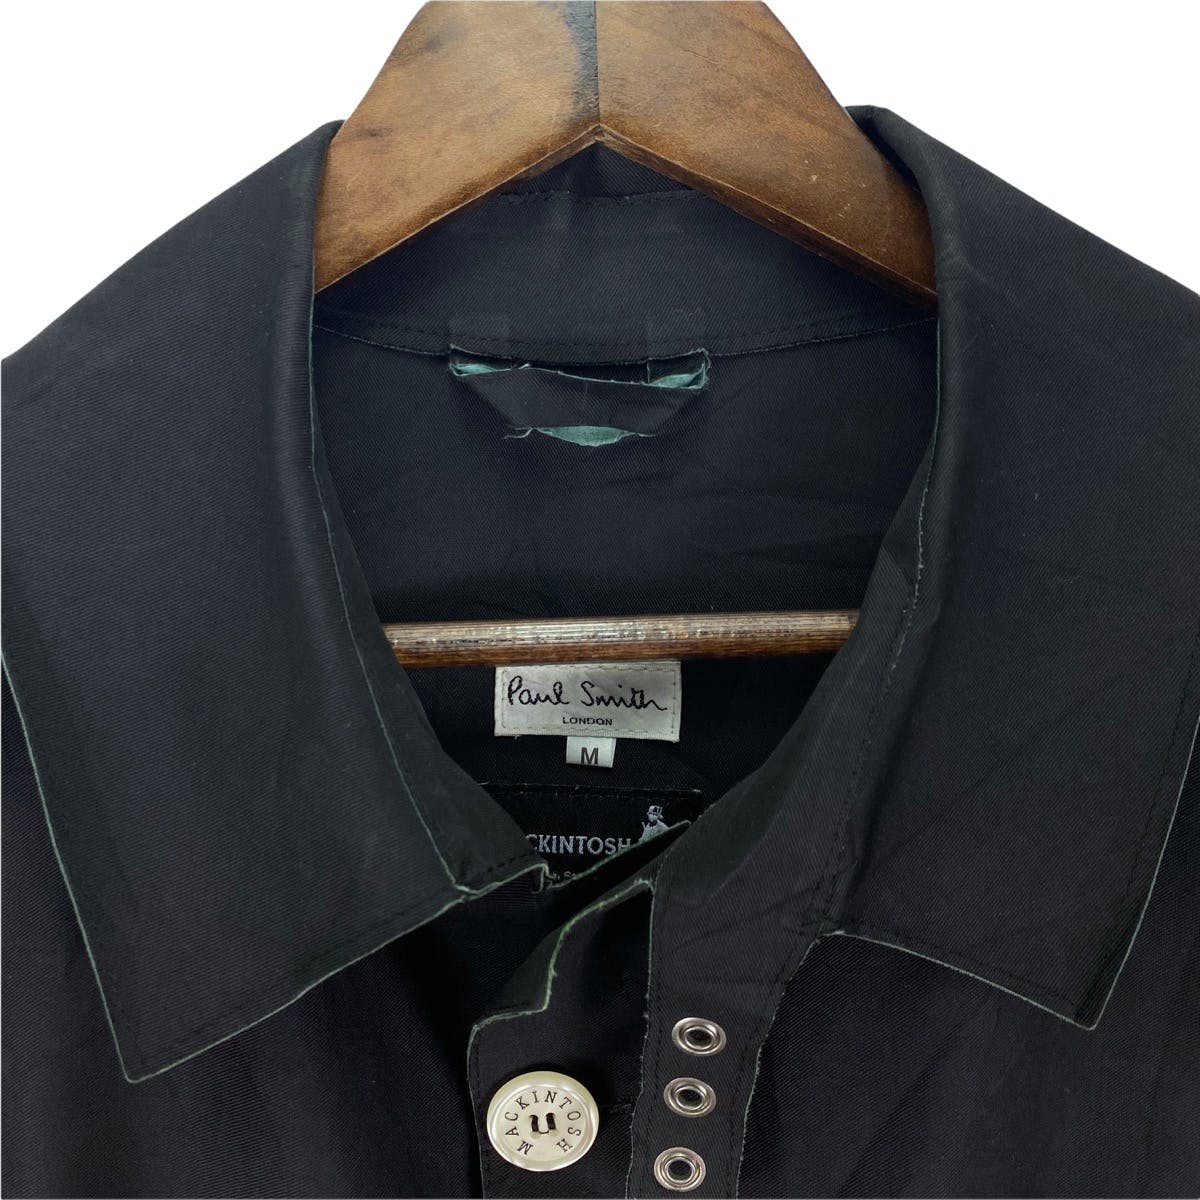 Mackintosh Paul Smith Trench Coat Jacket - 9